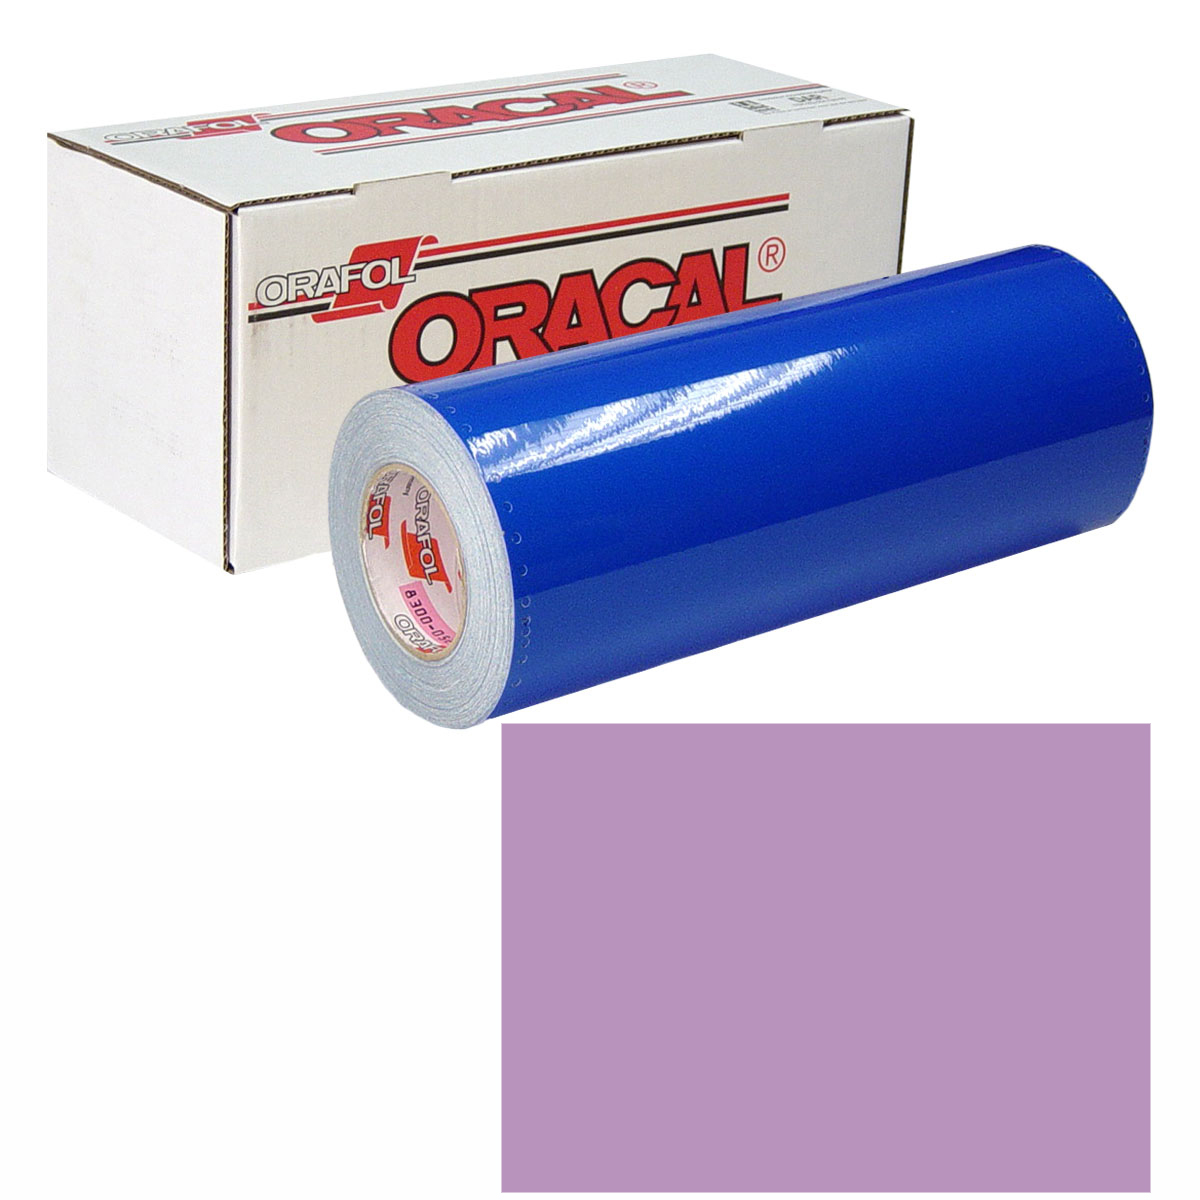 ORACAL 631 Unp 24in X 10yd 042 Lilac